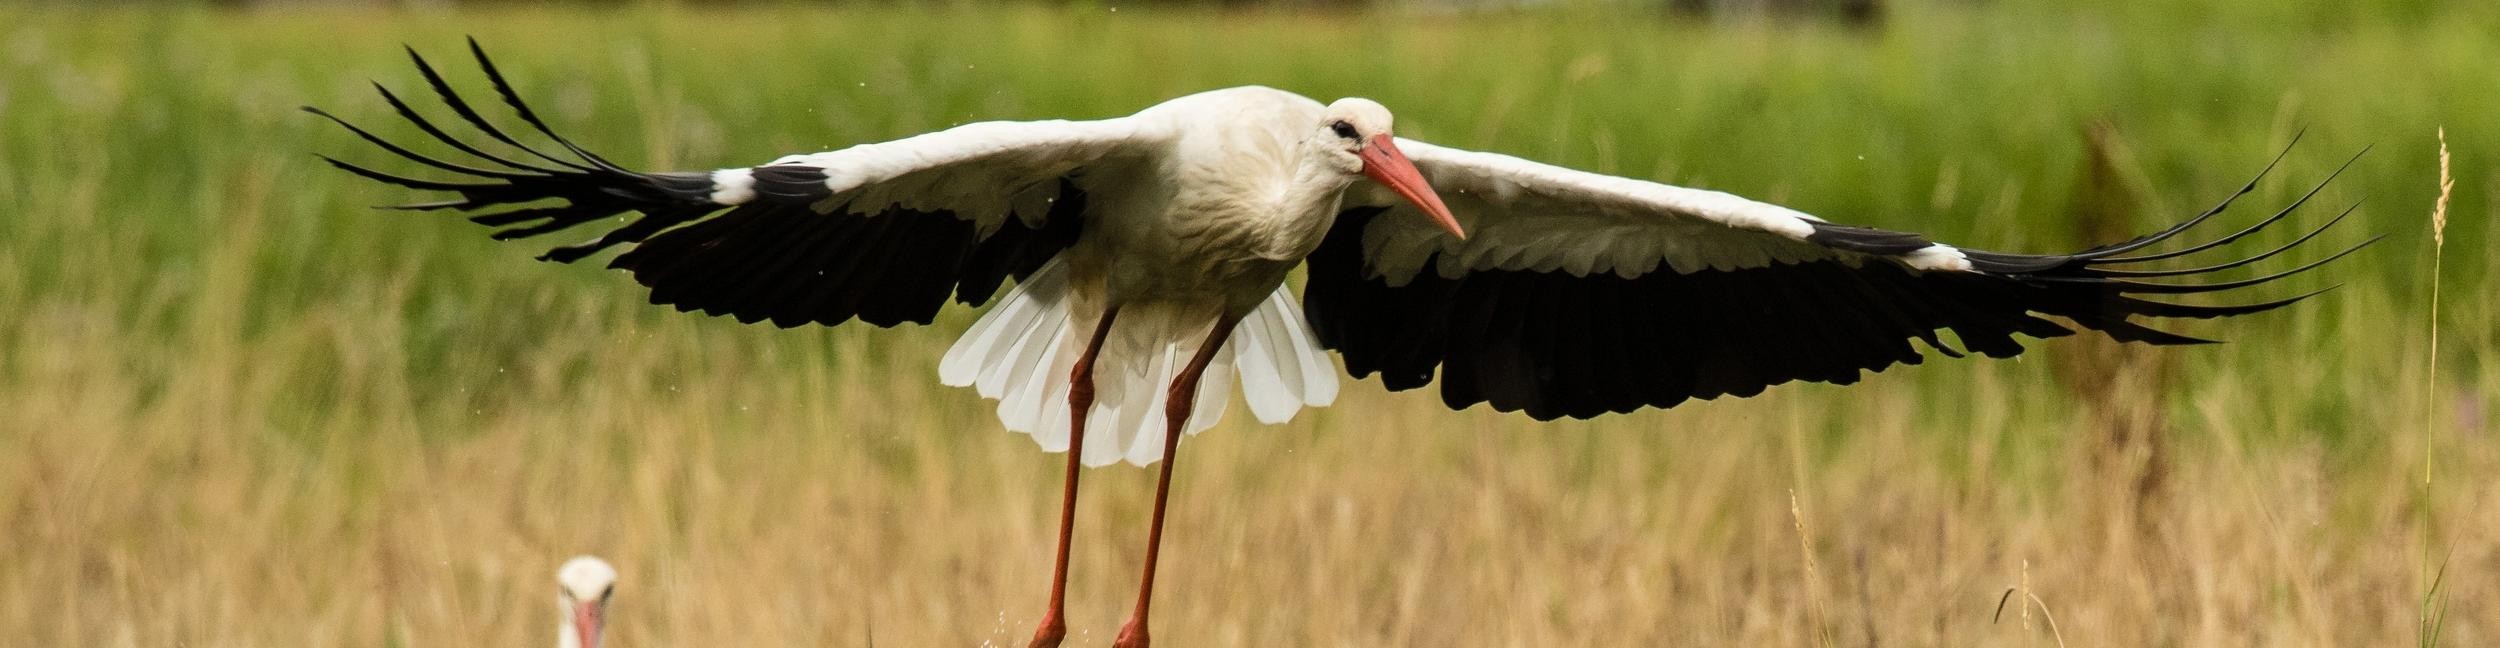 Flying stork in the floodplains of the Rhine